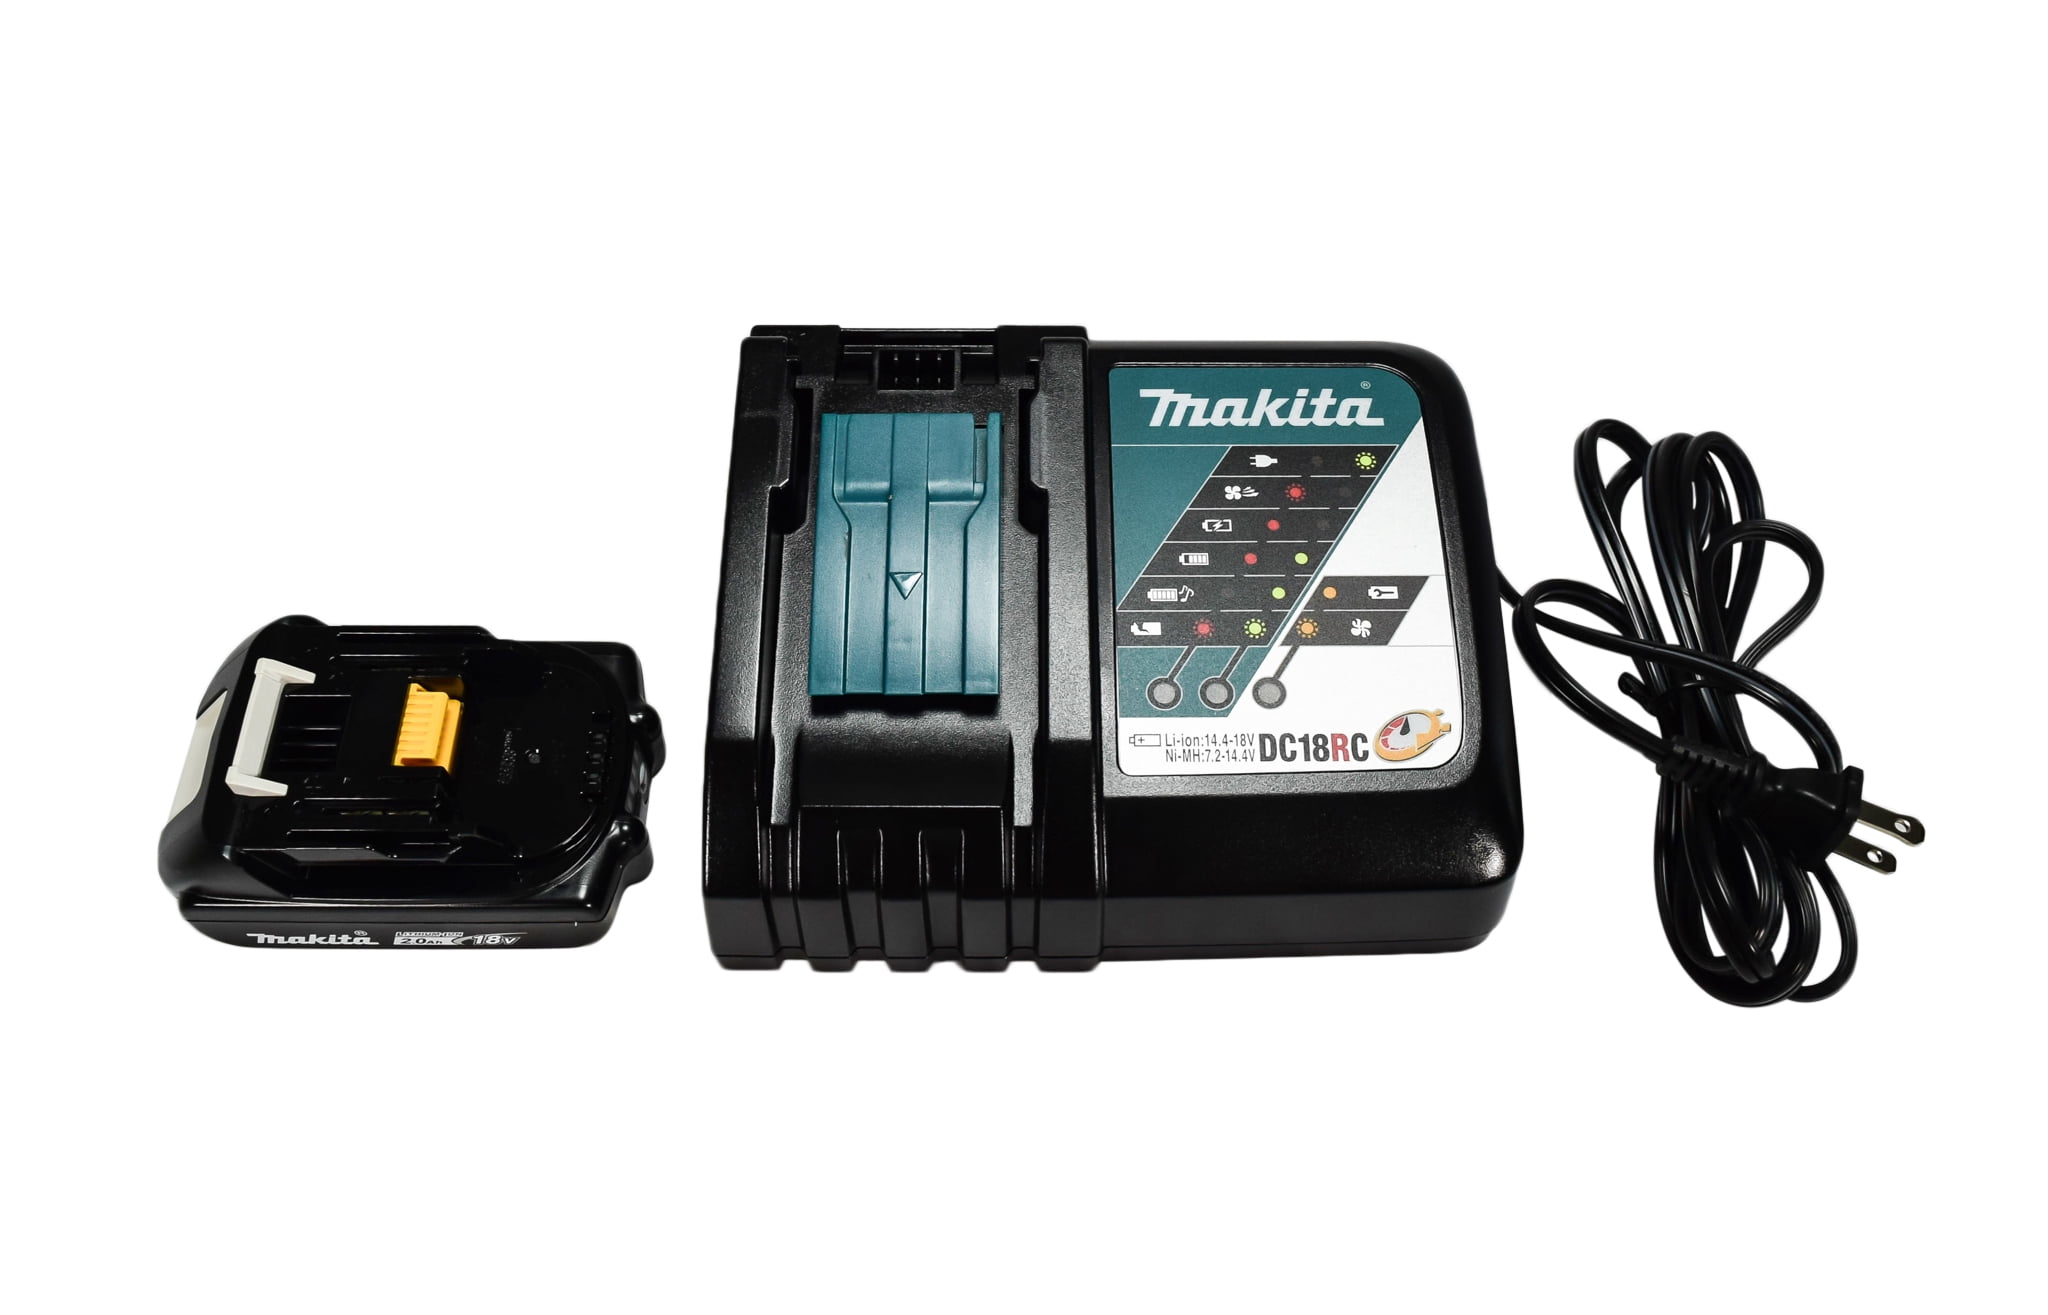 Makita 2.0Ah Compact Lithium-Ion Battery and Charger BL1820BDC1 - Walmart.com